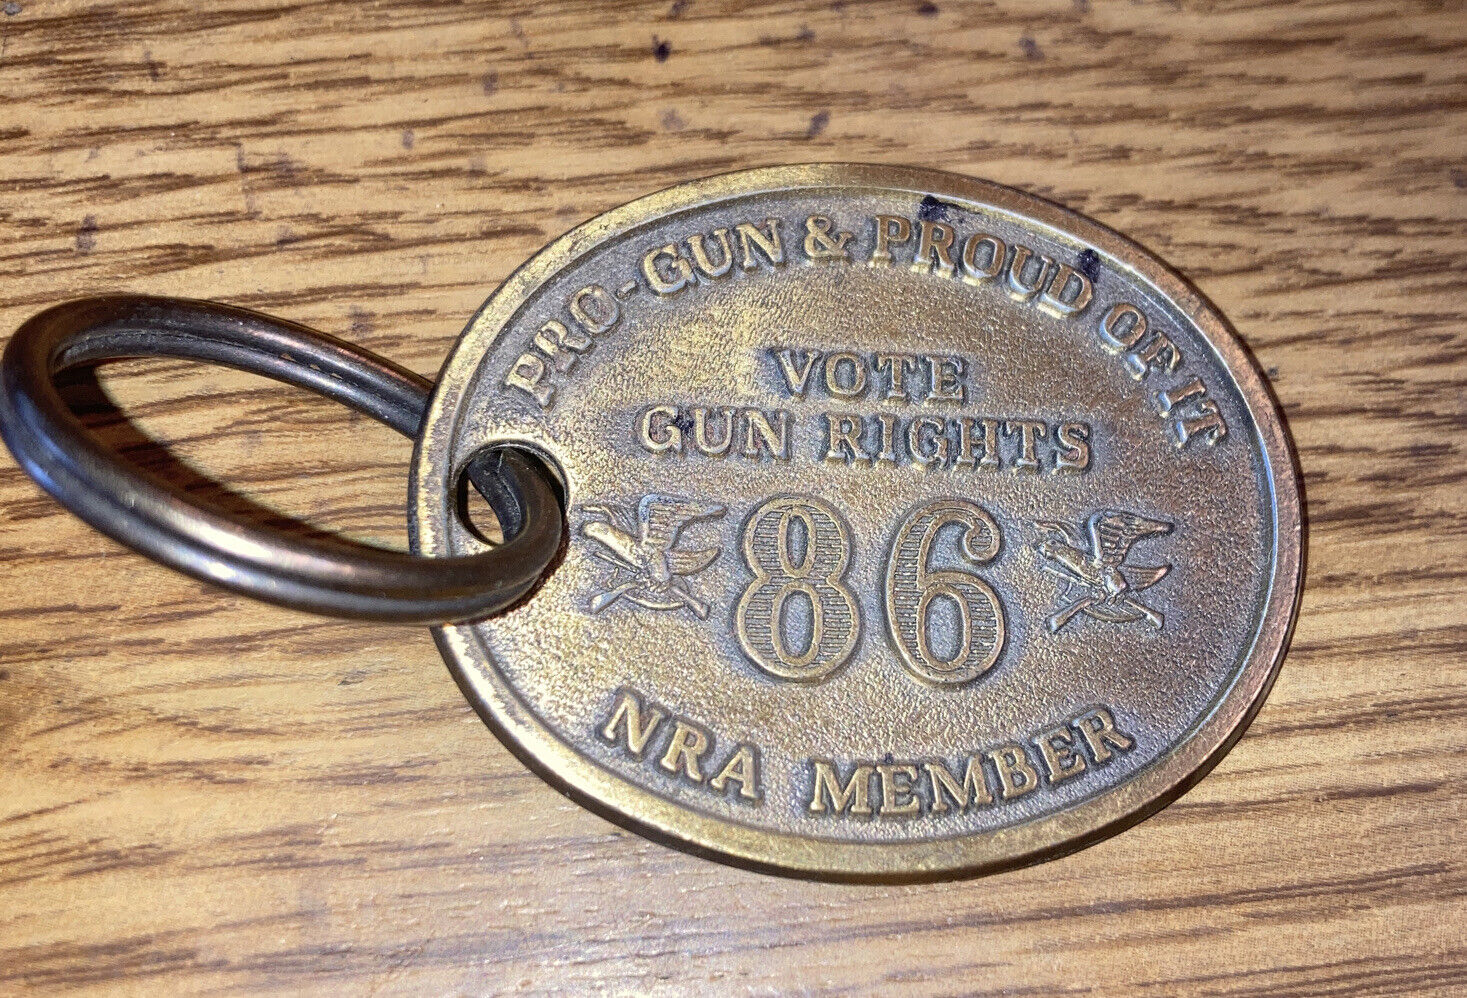 Pro Gun & Proud of It Vintage Brass Keychain, Vote Gun Rights 86 NRA Member, USA